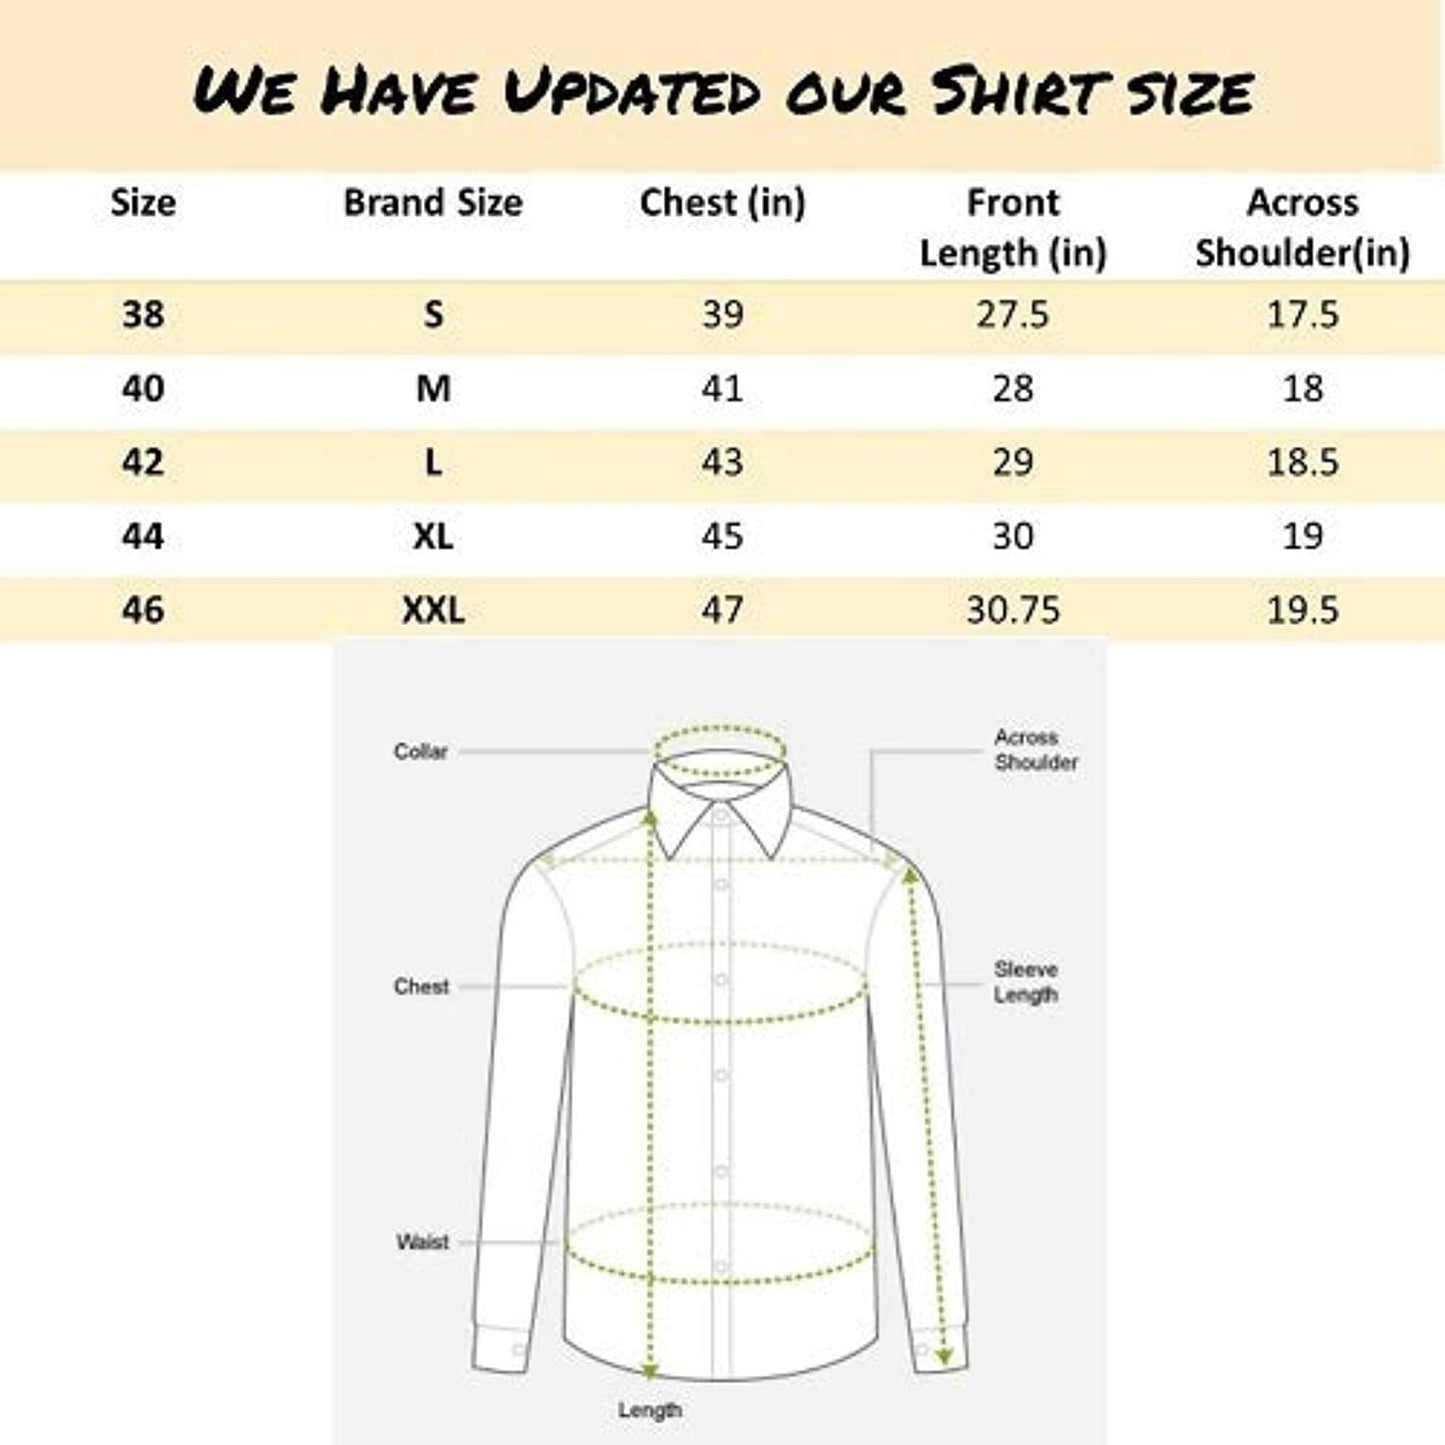 Solid Colour Cutaway Collar Slim Fit Shirt